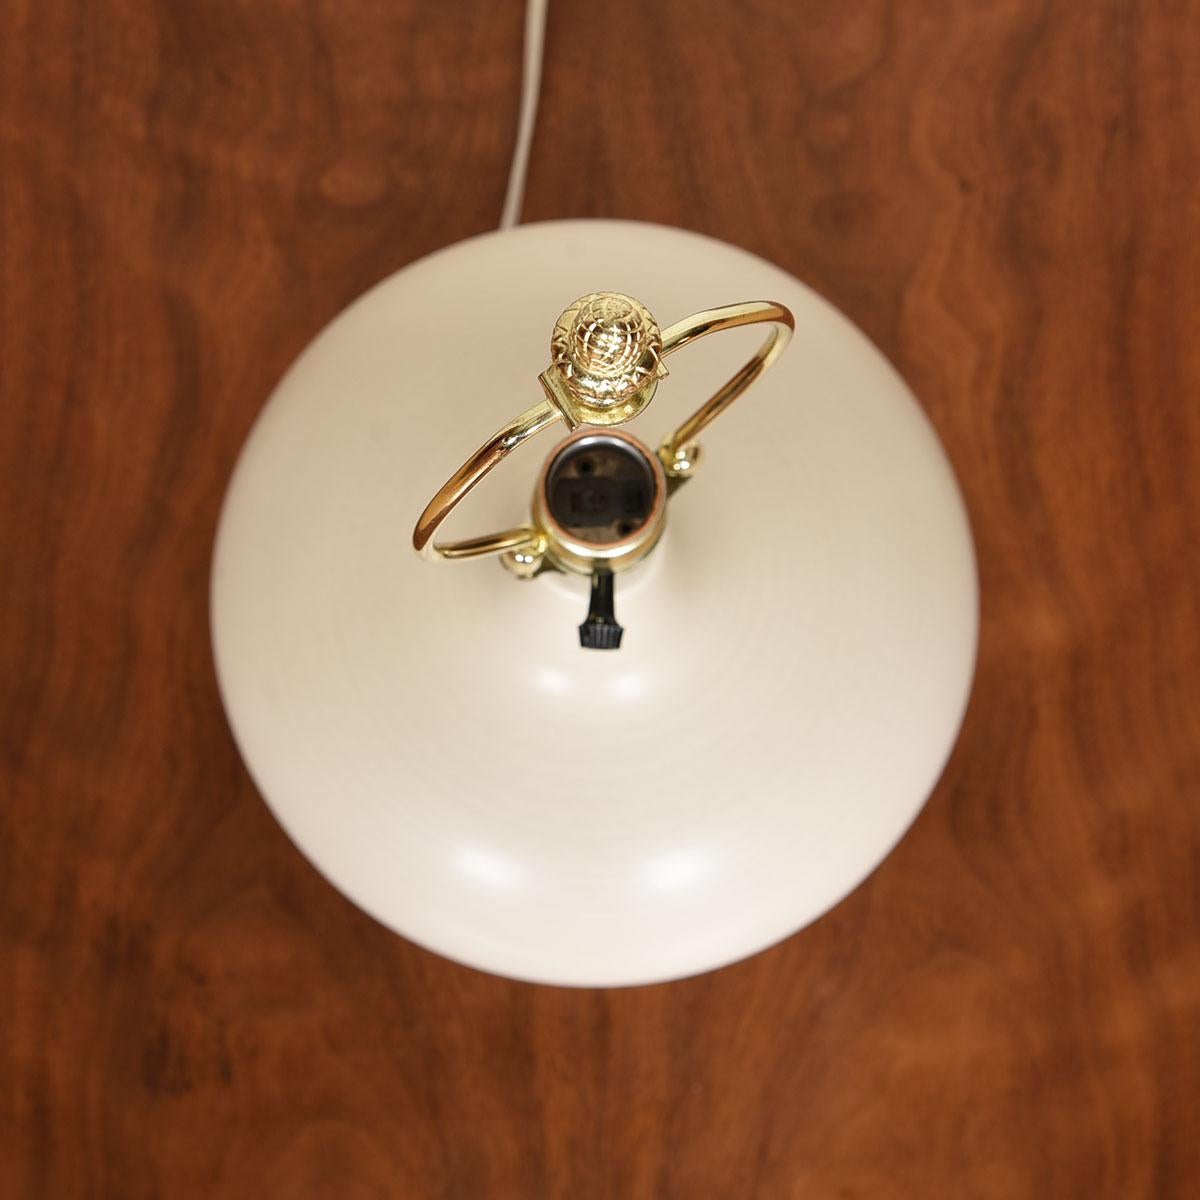 20th Century Small Round Bostlund Table Lamp by Lotte & Gunnar Bostlund For Sale